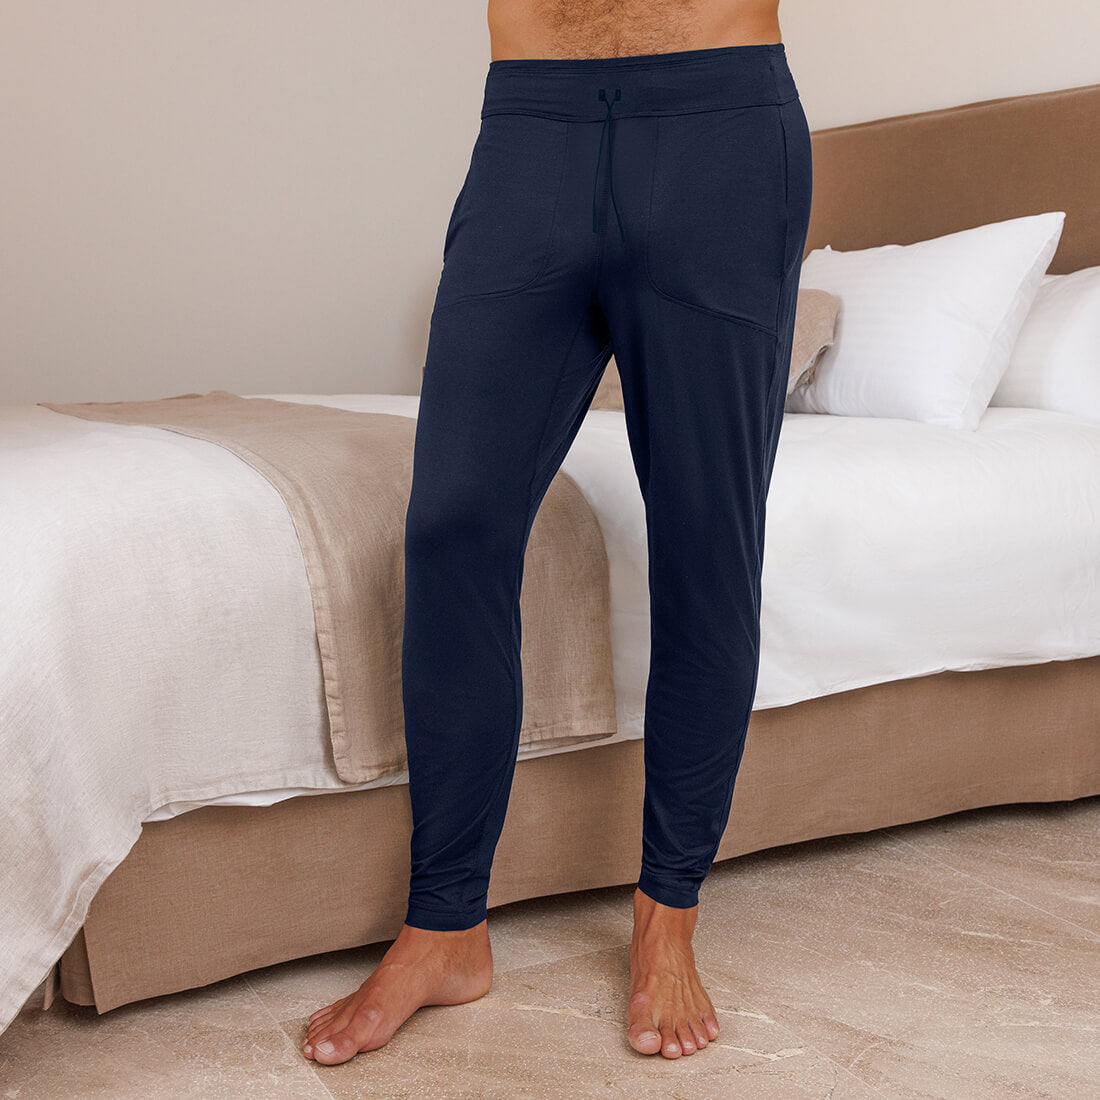 Functional sleepwear for men || Navy